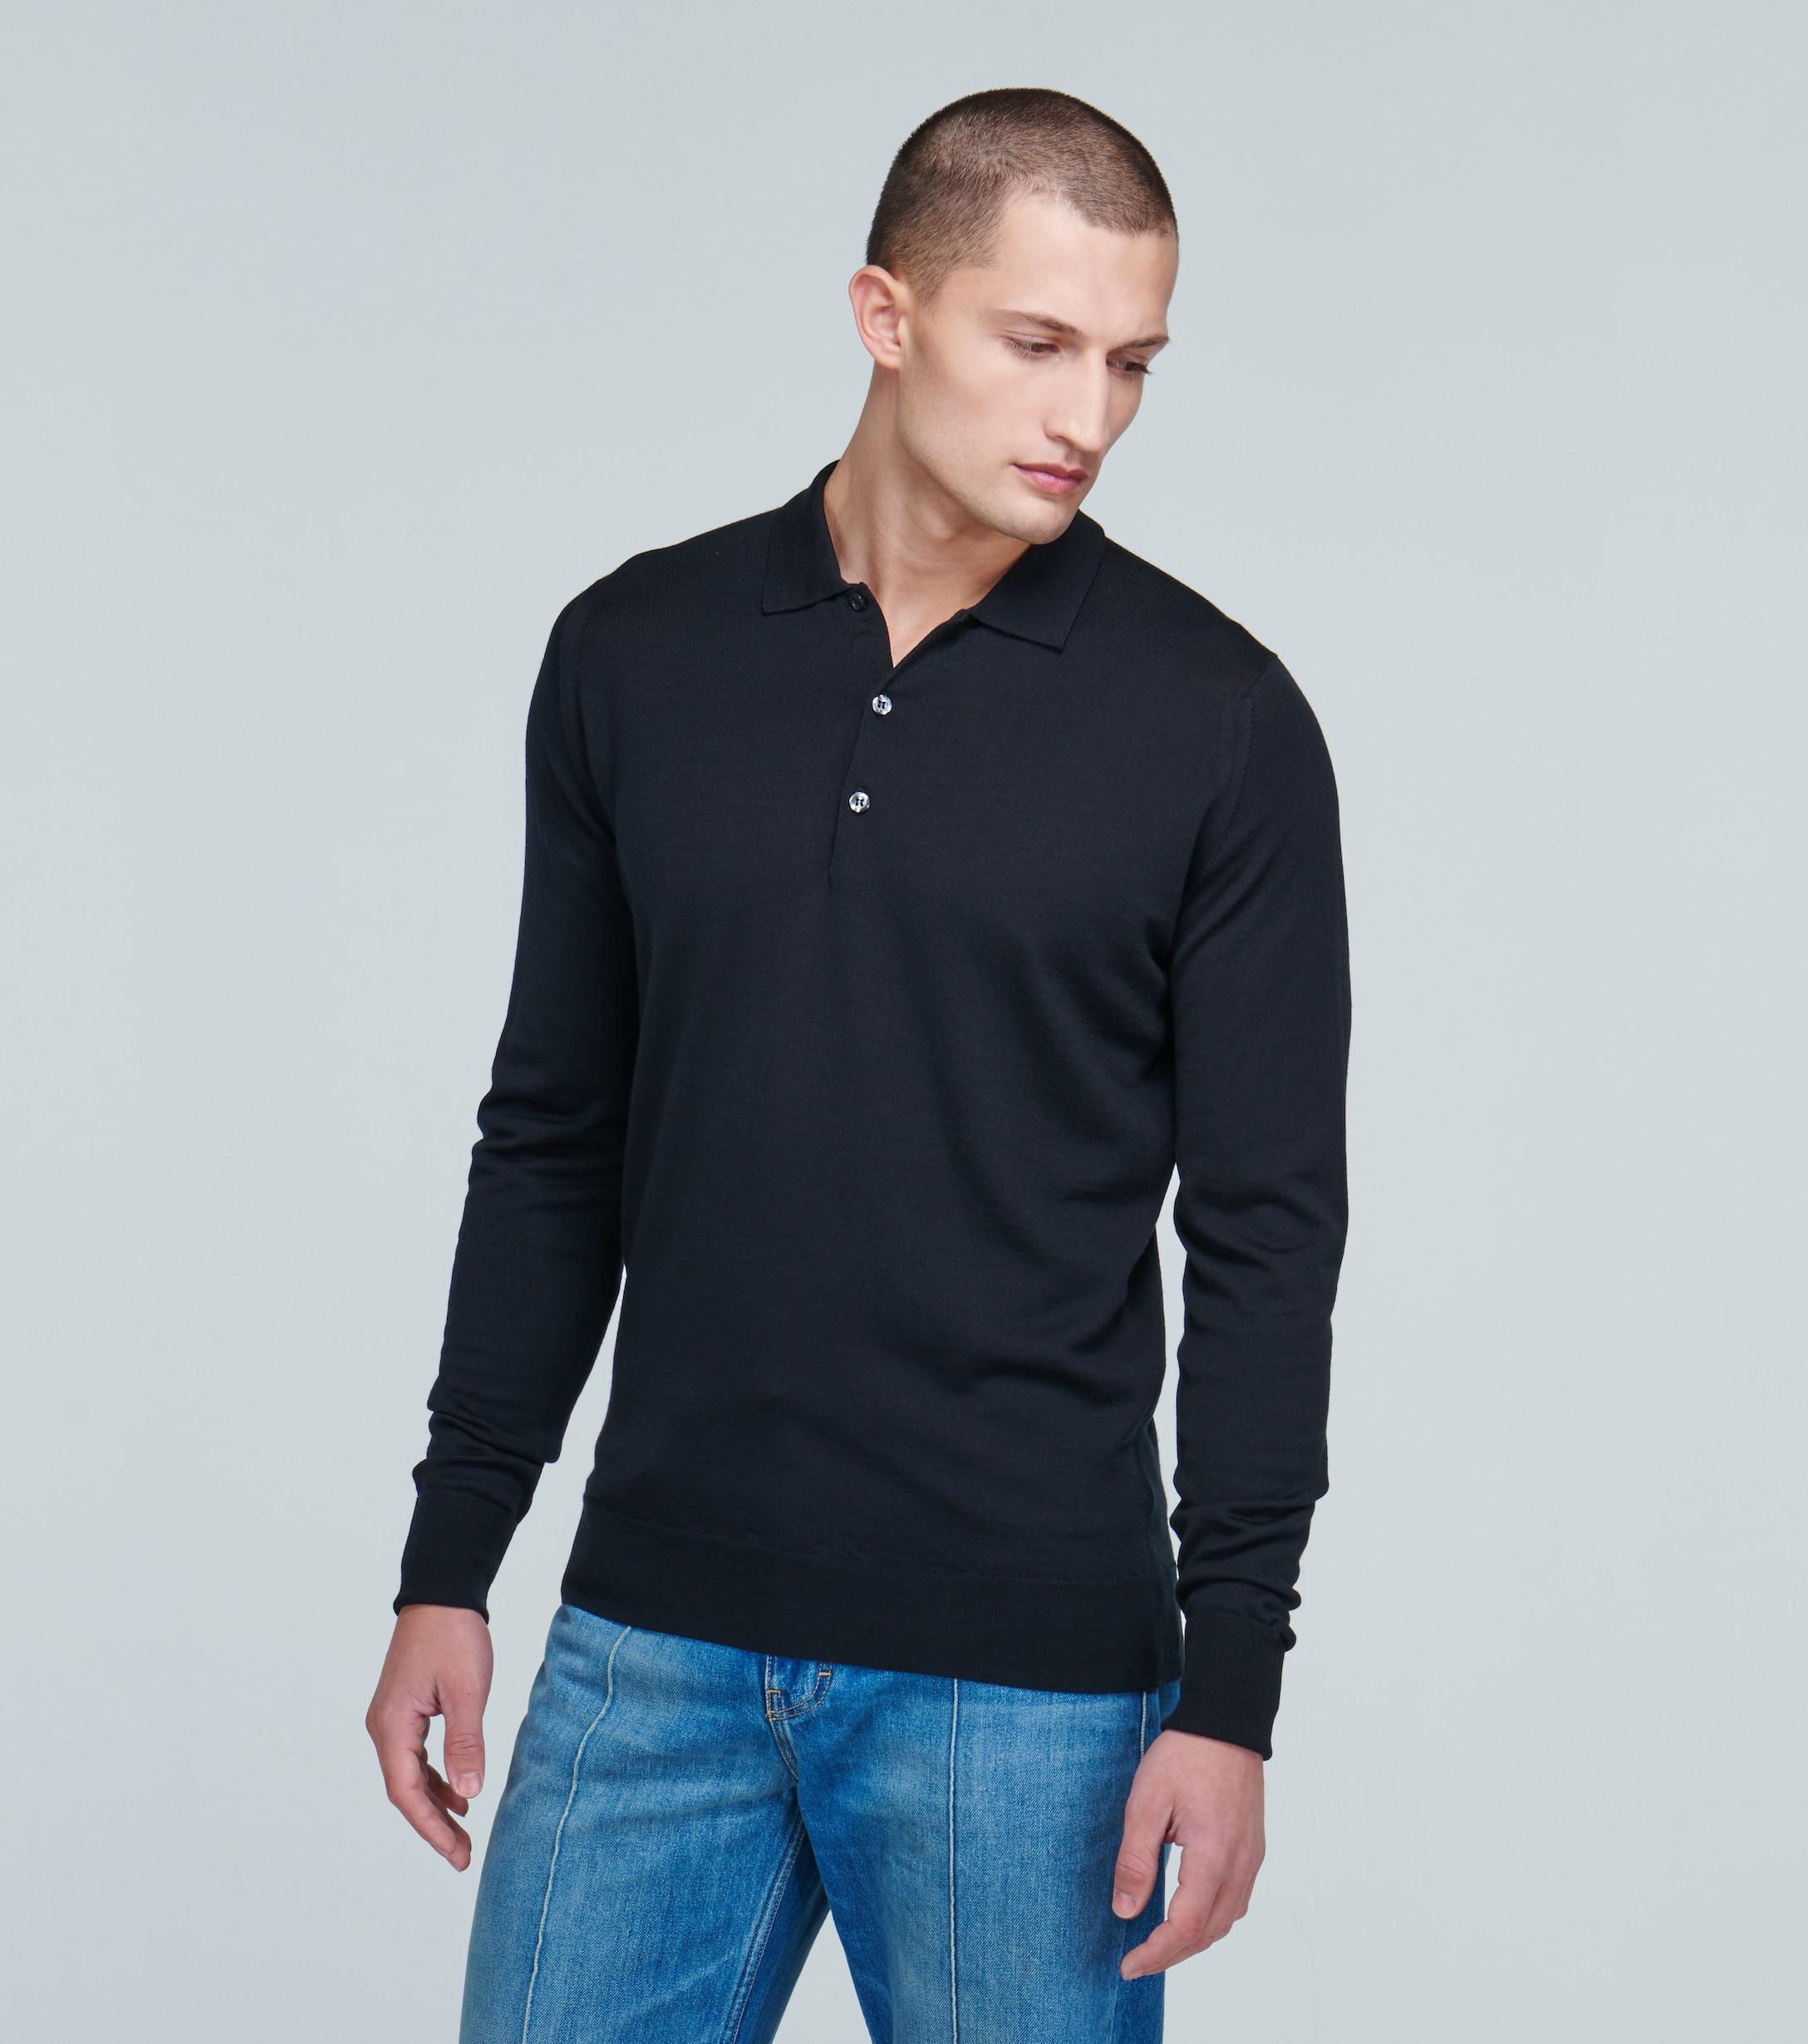 John Smedley Wool Long-sleeved Polo Shirt in Black for Men - Lyst